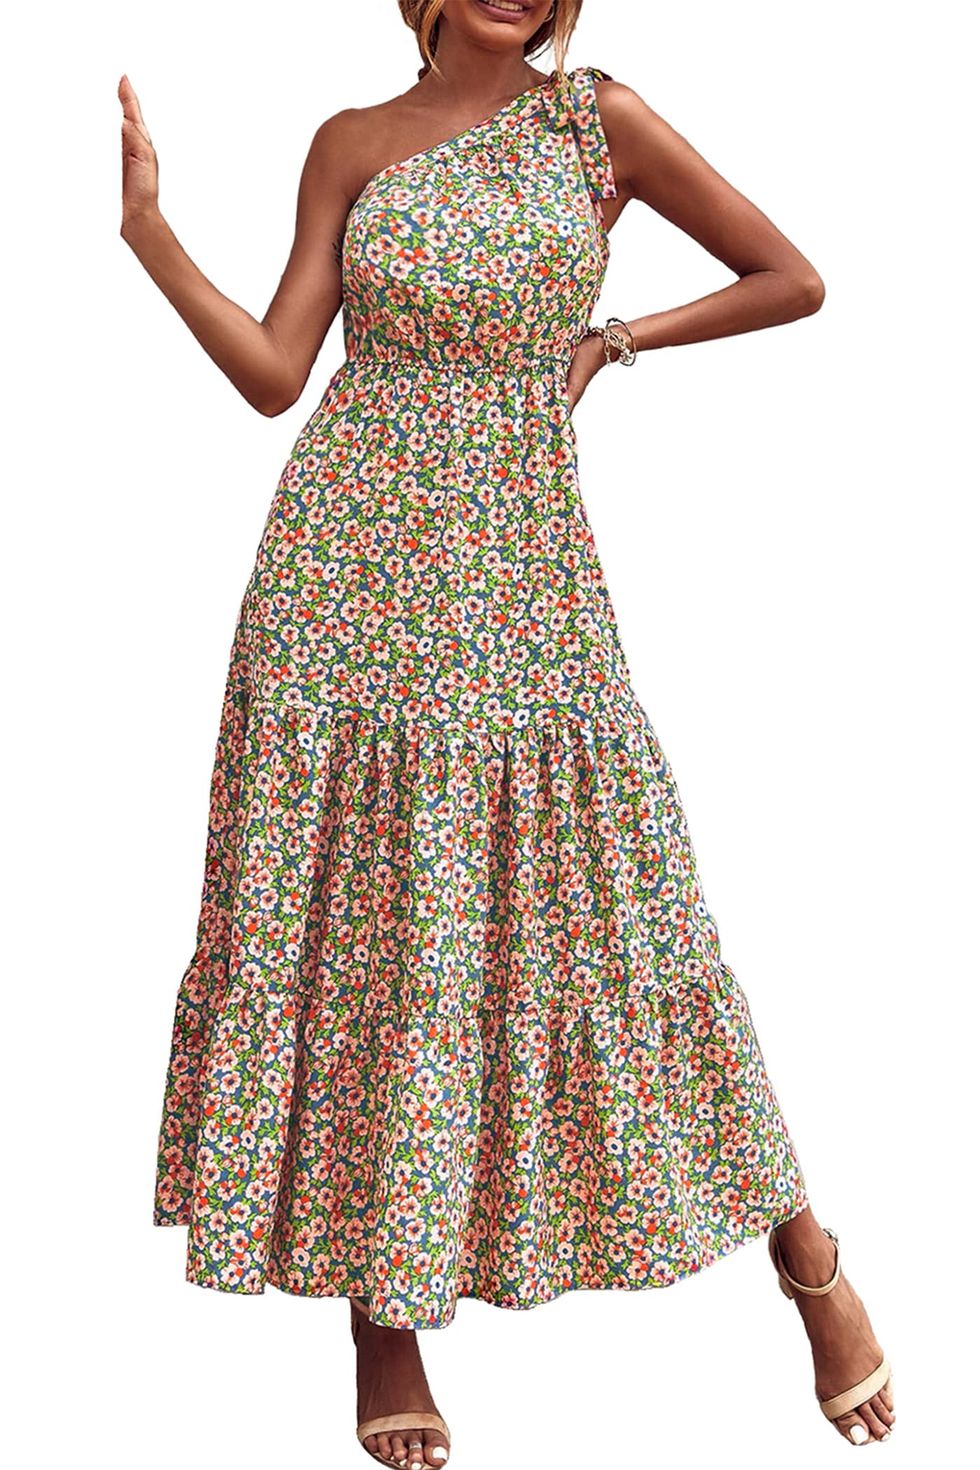 PRETTYGARDEN Floral Maxi Dress